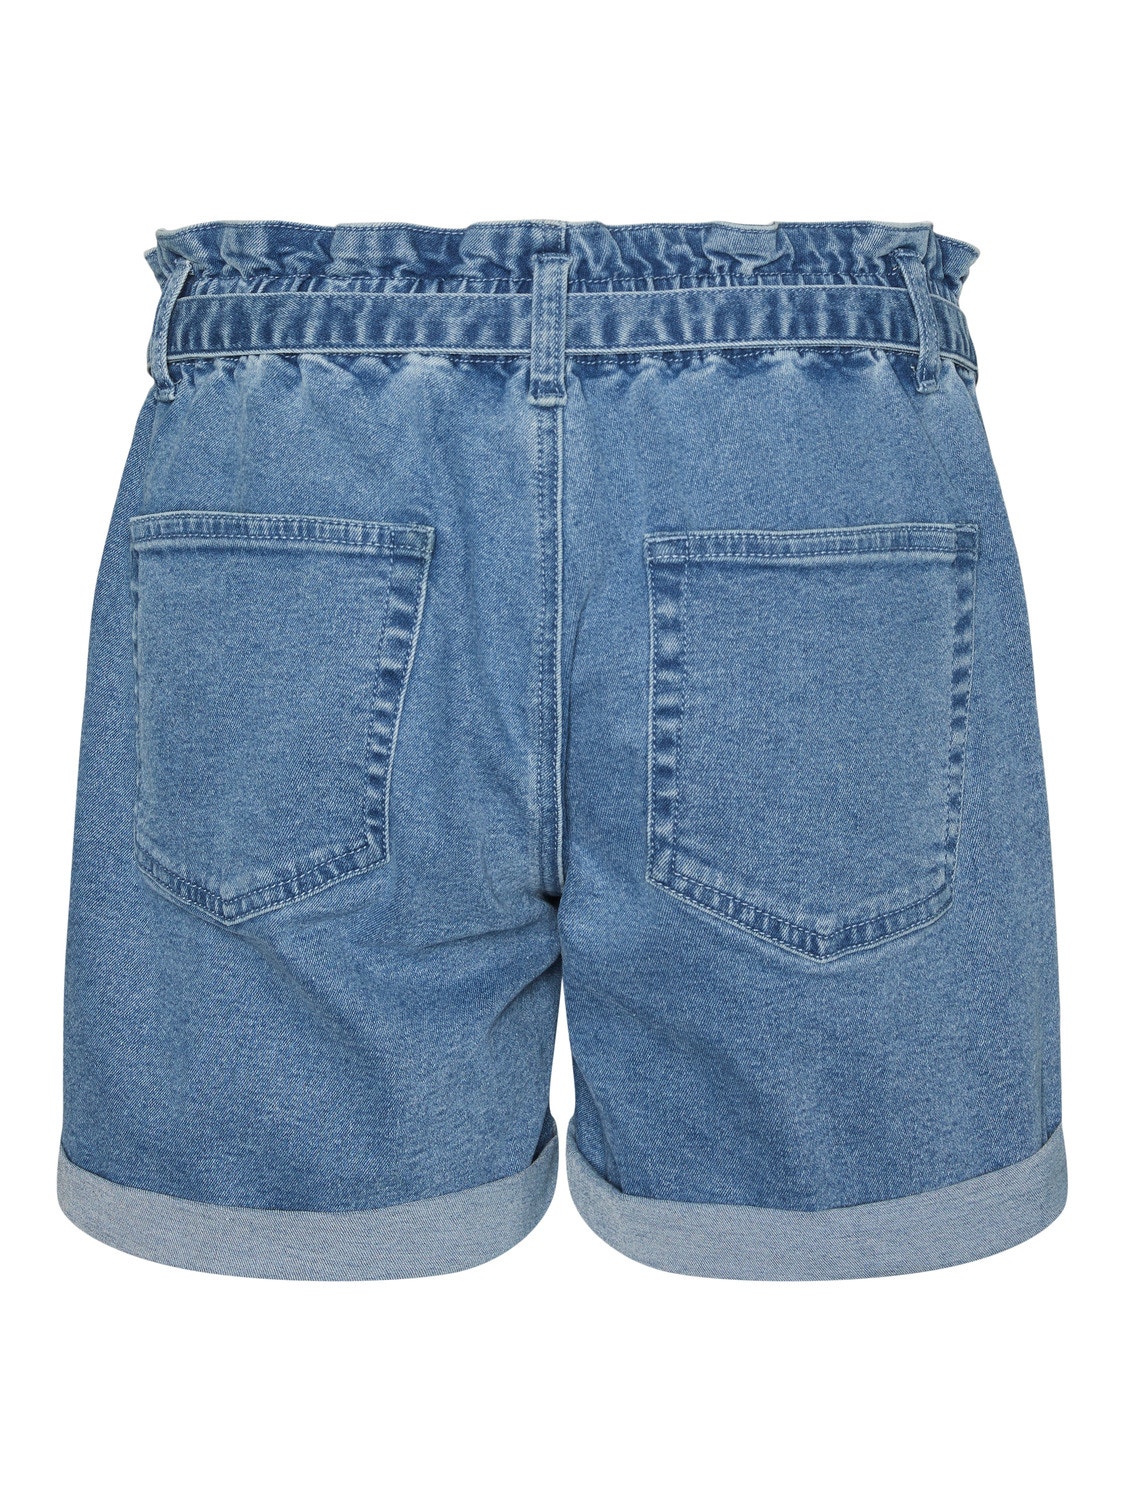 MAMA.LICIOUS Shorts Regular Fit Taille basse Ourlets repliés -Light Blue Denim - 20018285